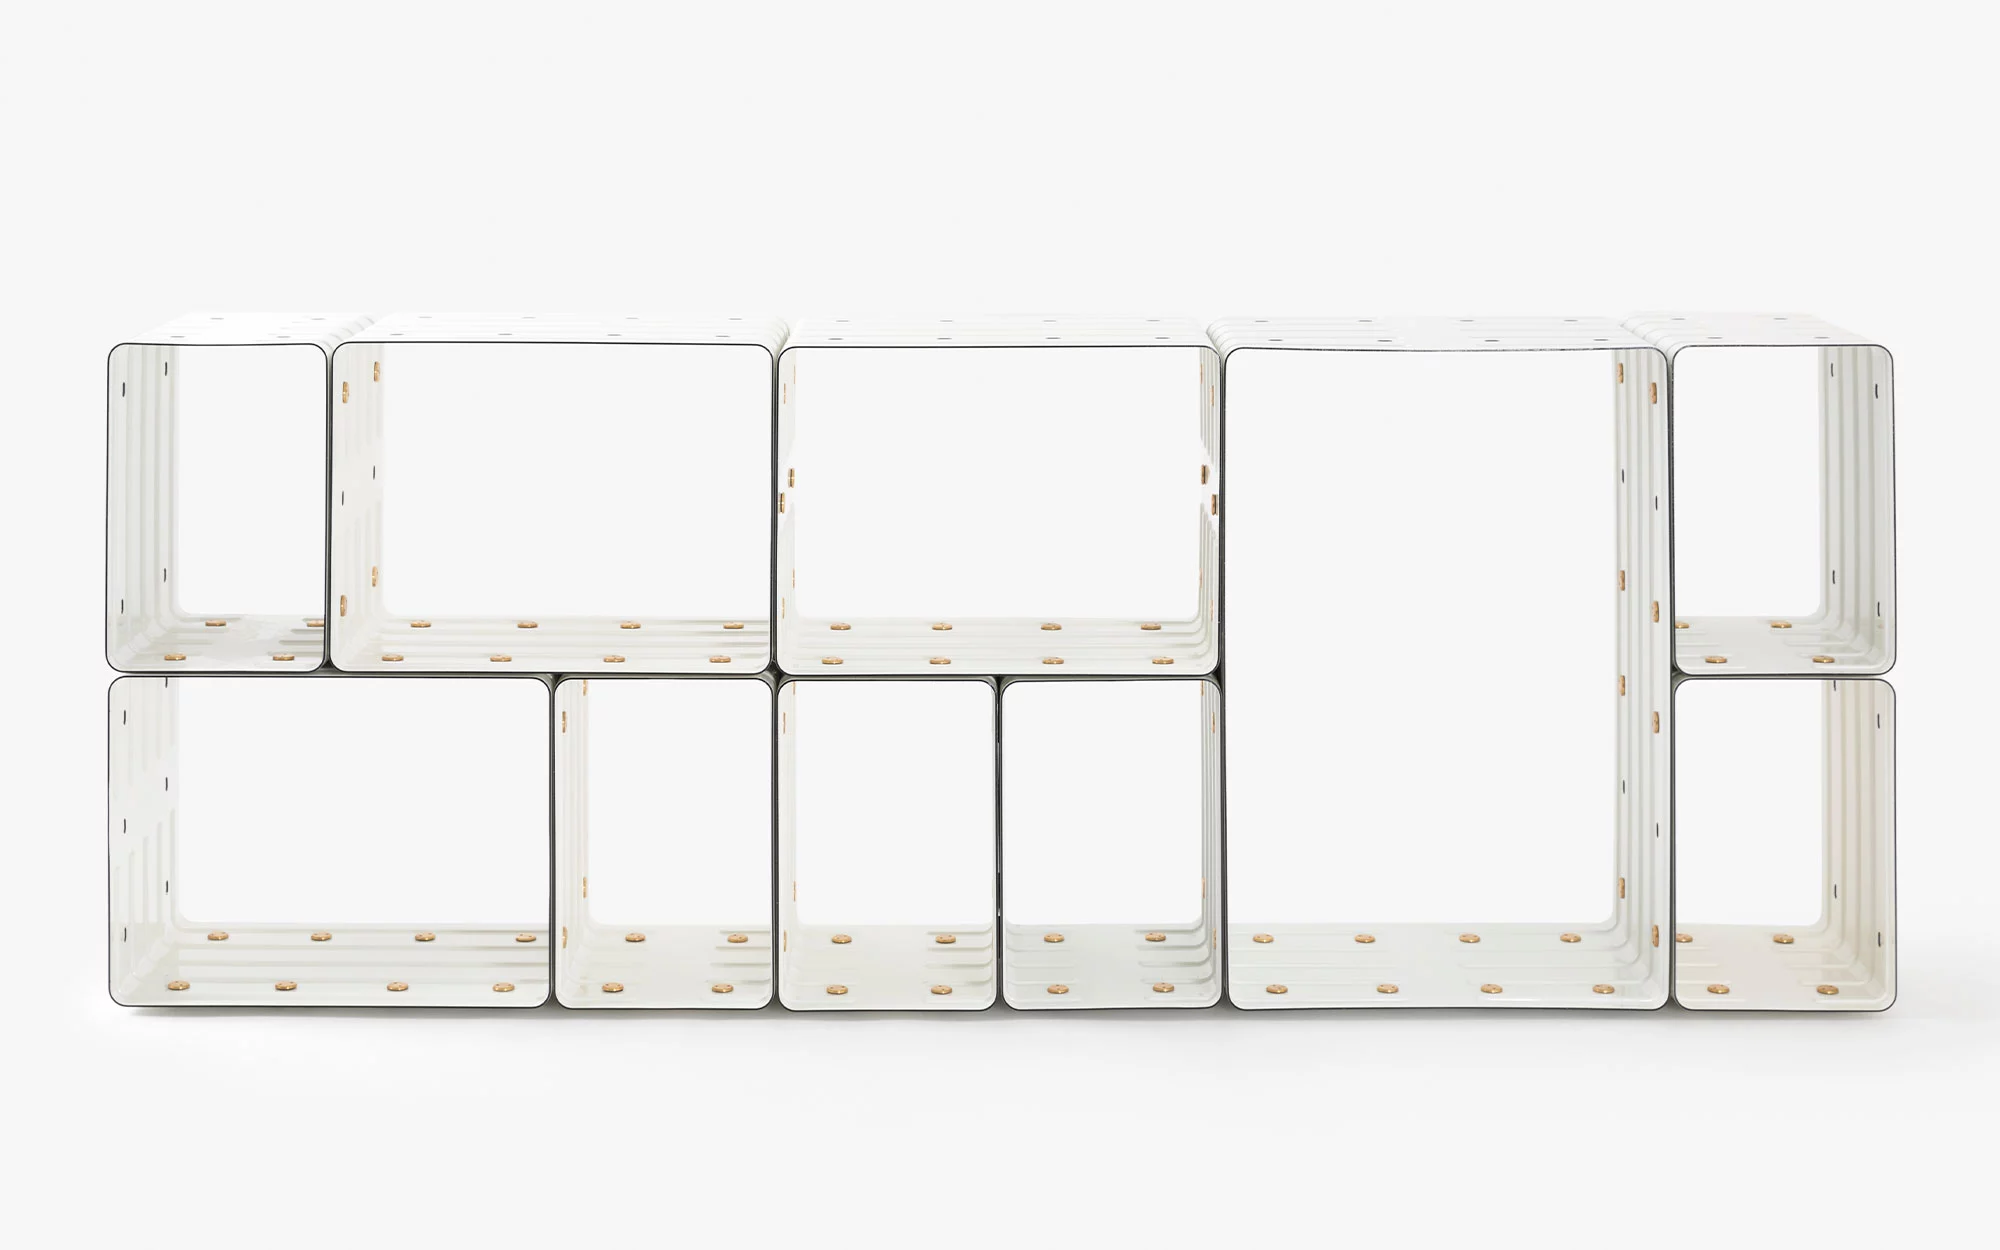 Quobus 1,3,6 monochromatic - Marc Newson - Seating - Galerie kreo